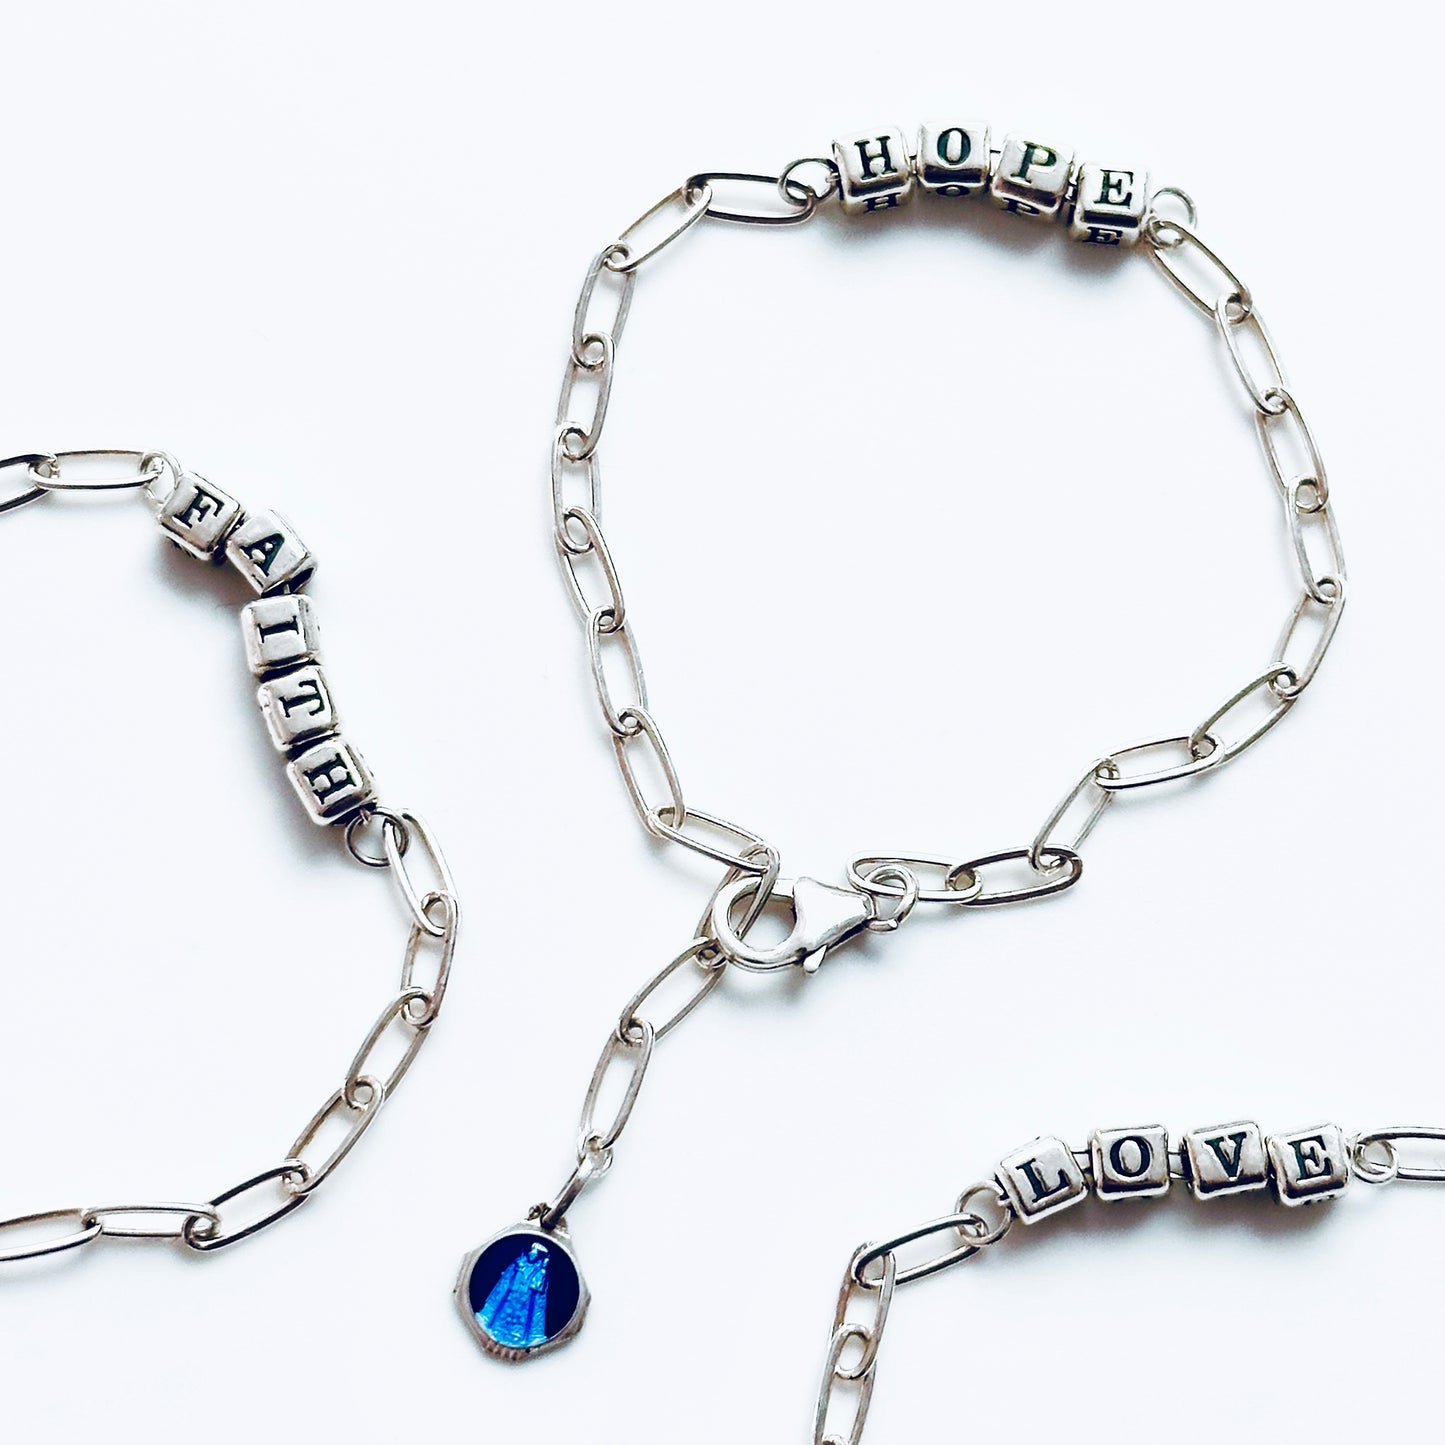 Delicate sterling silver Hope message gift bracelet with vintage blue charm